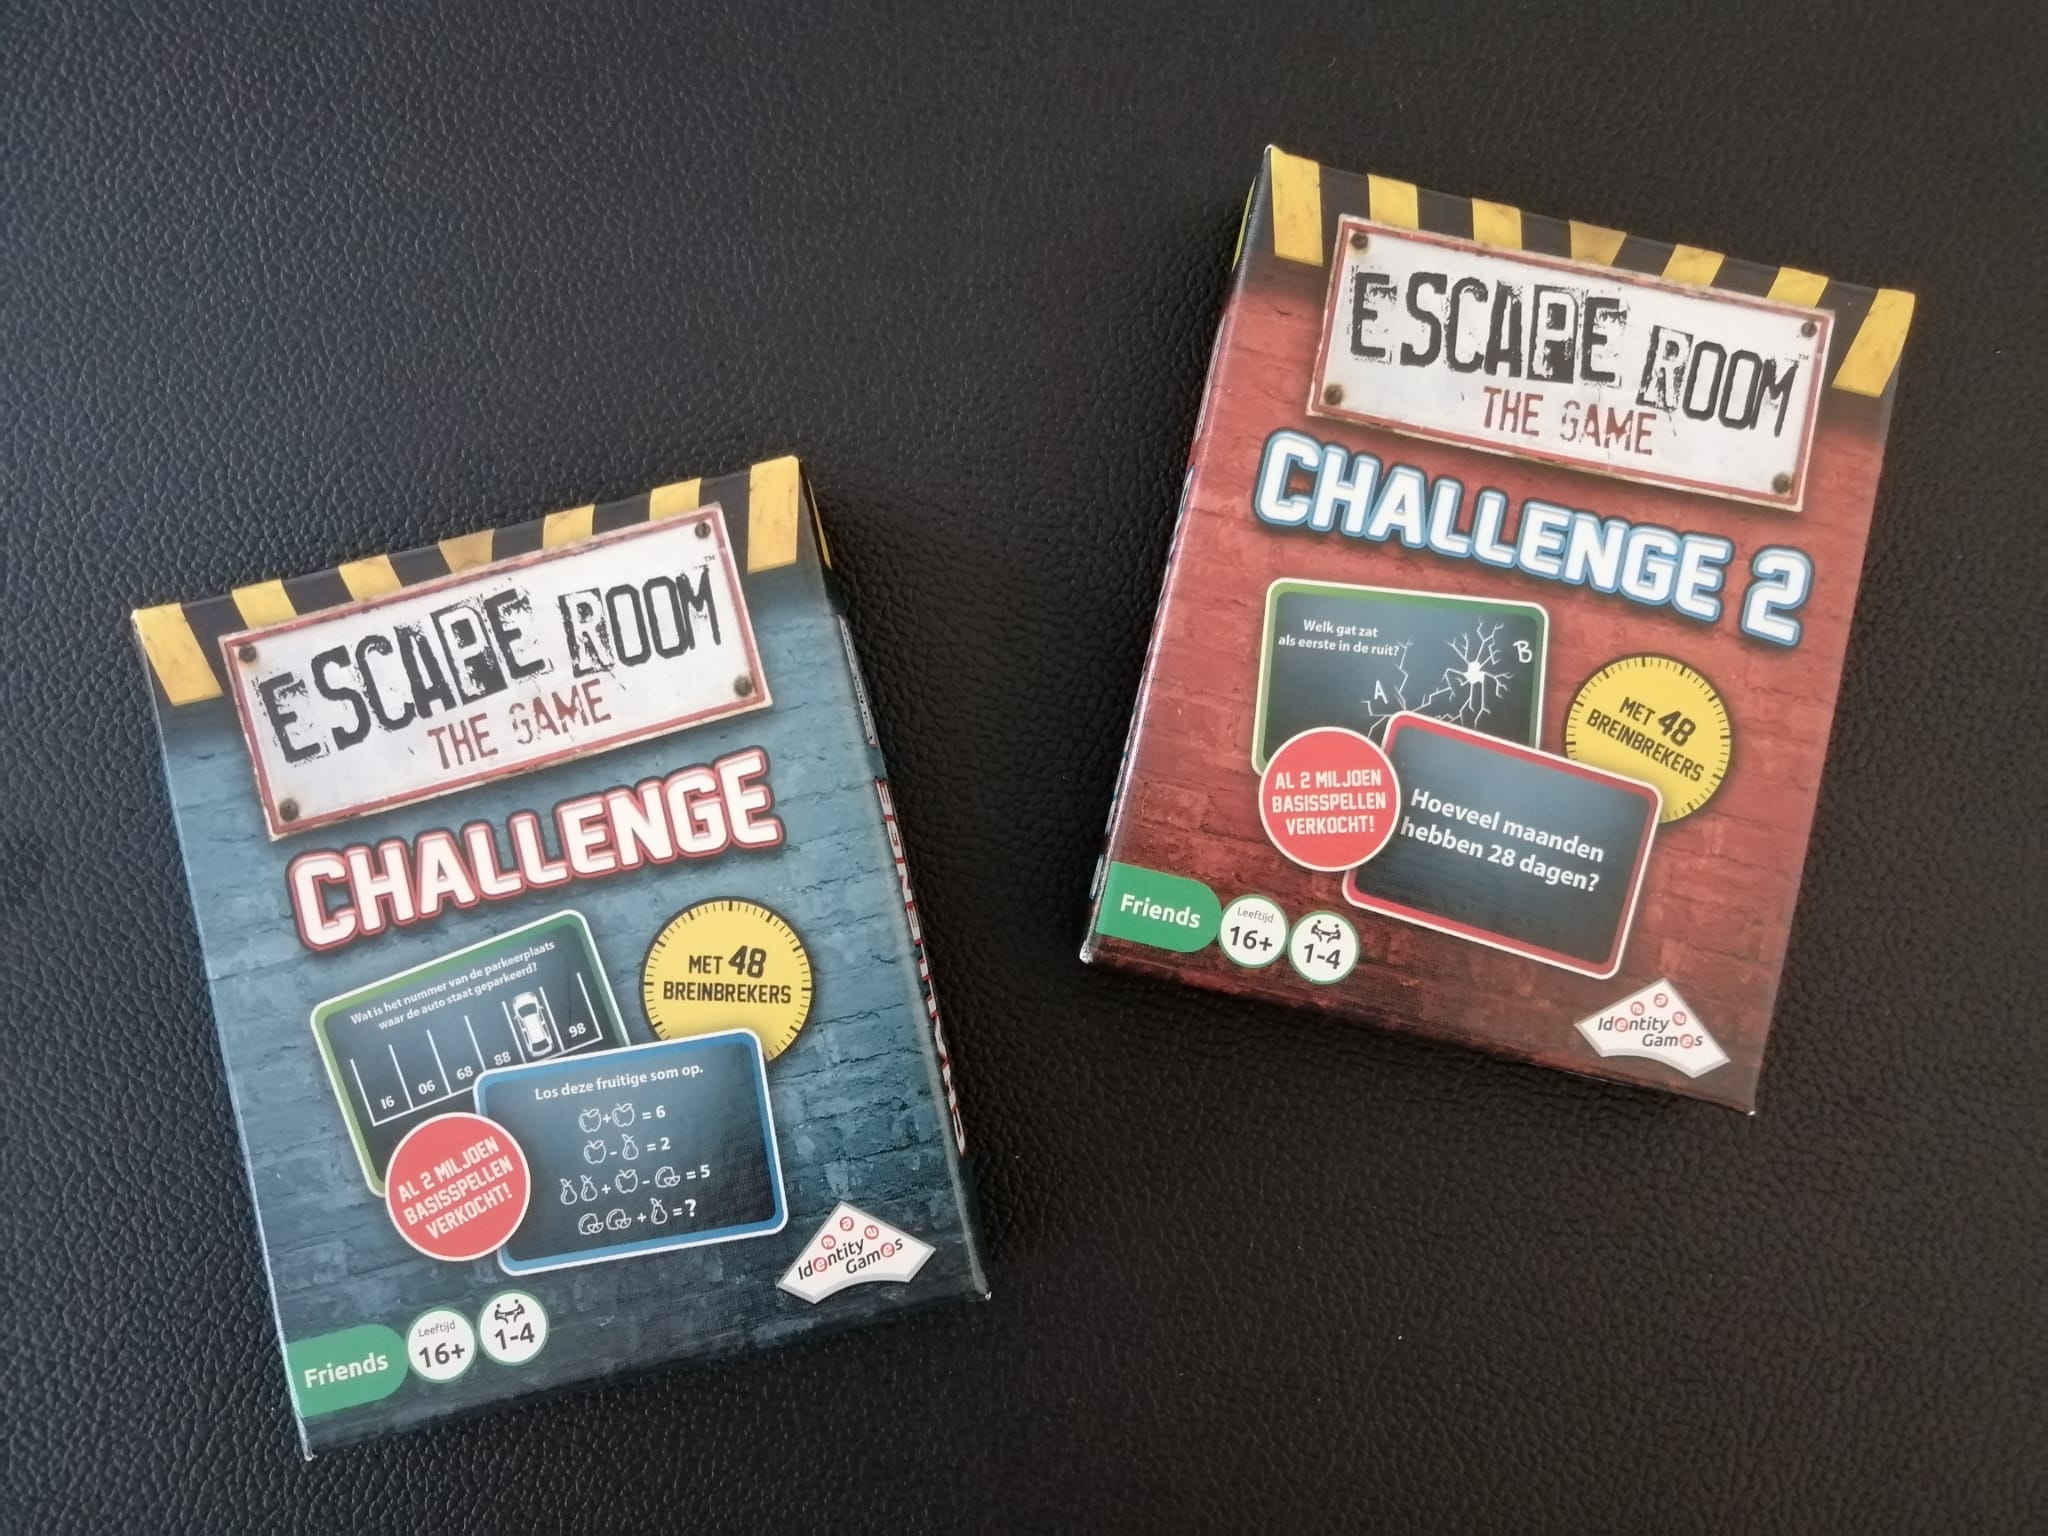 Escape room game challenge